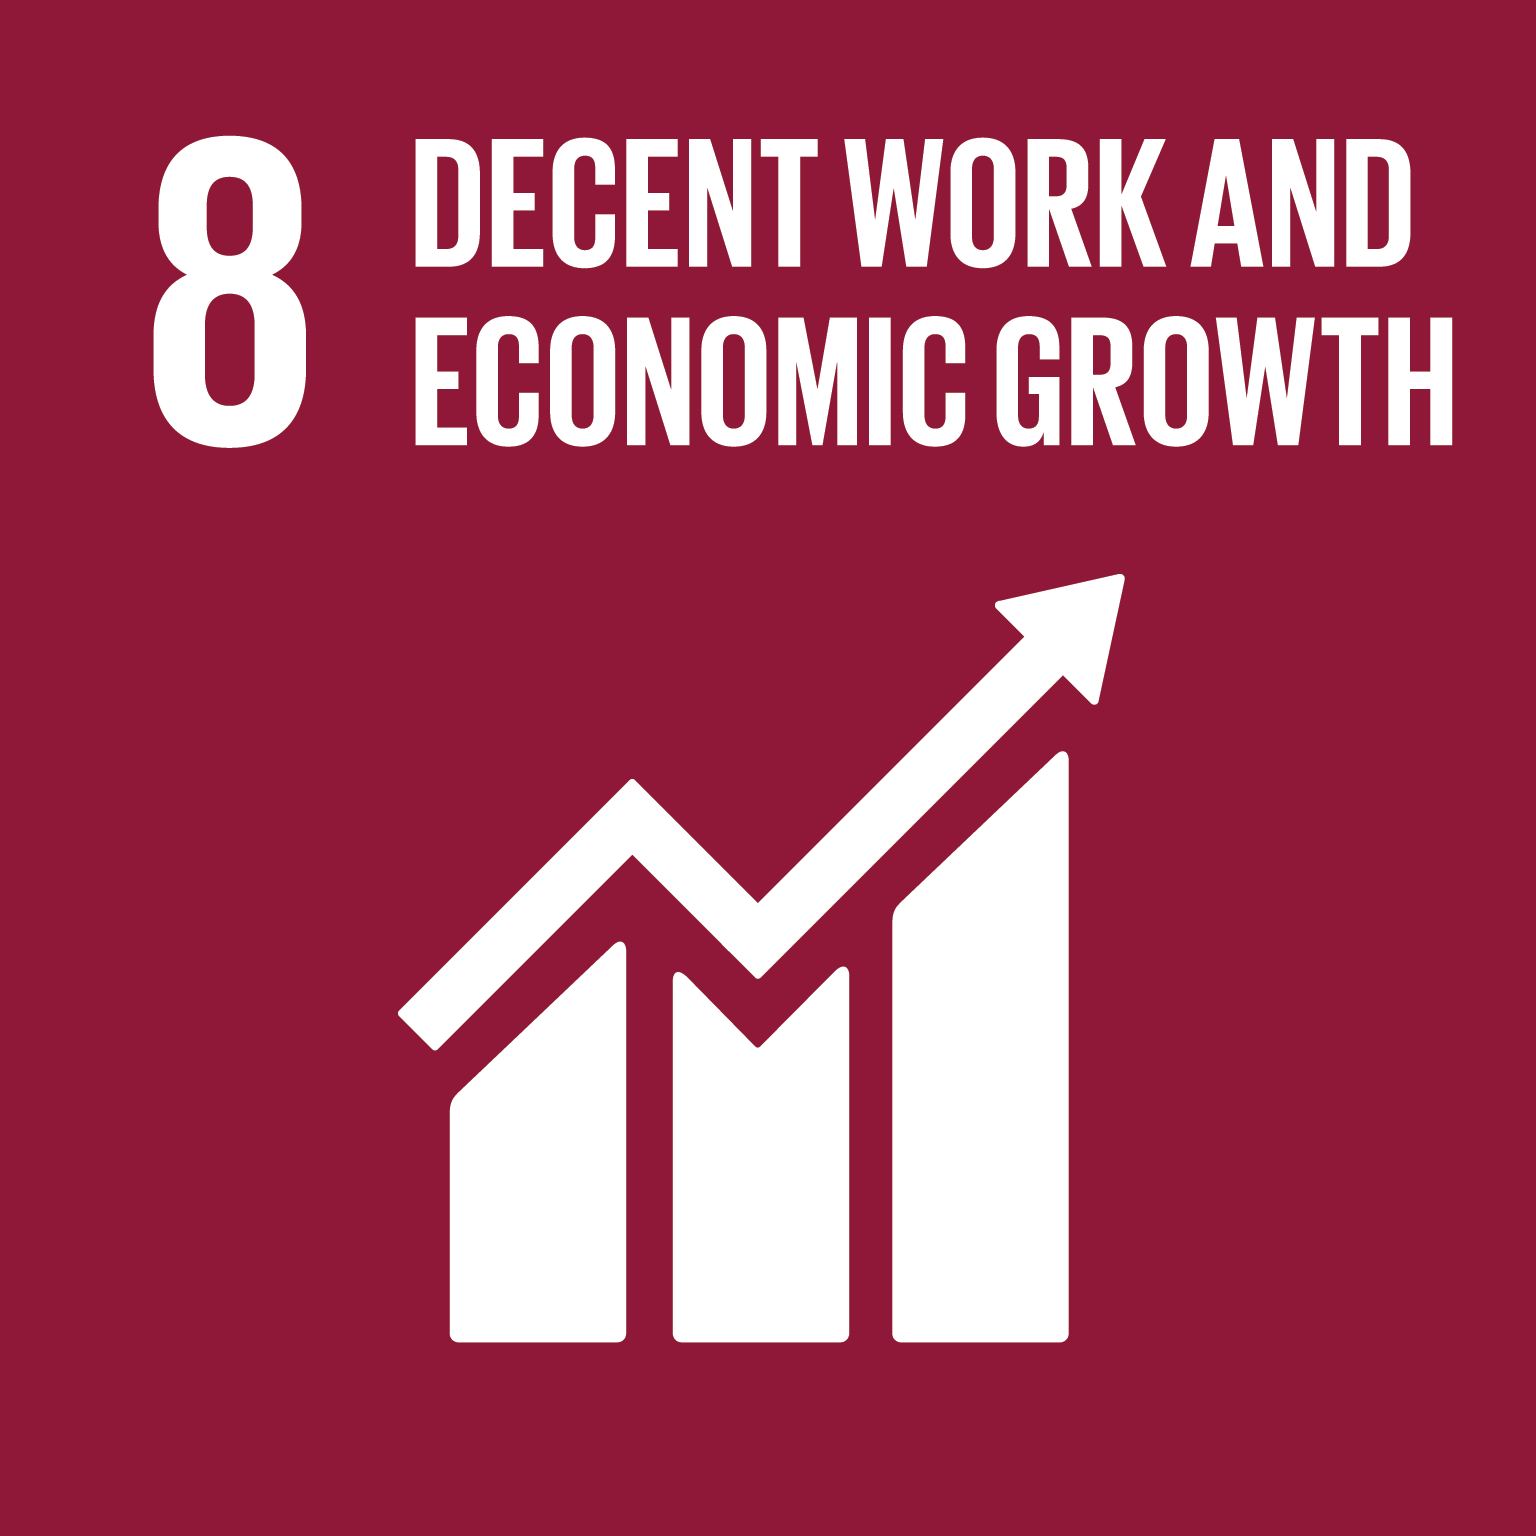 Resultado de imagem para sustainable development goals decent work and economic growth